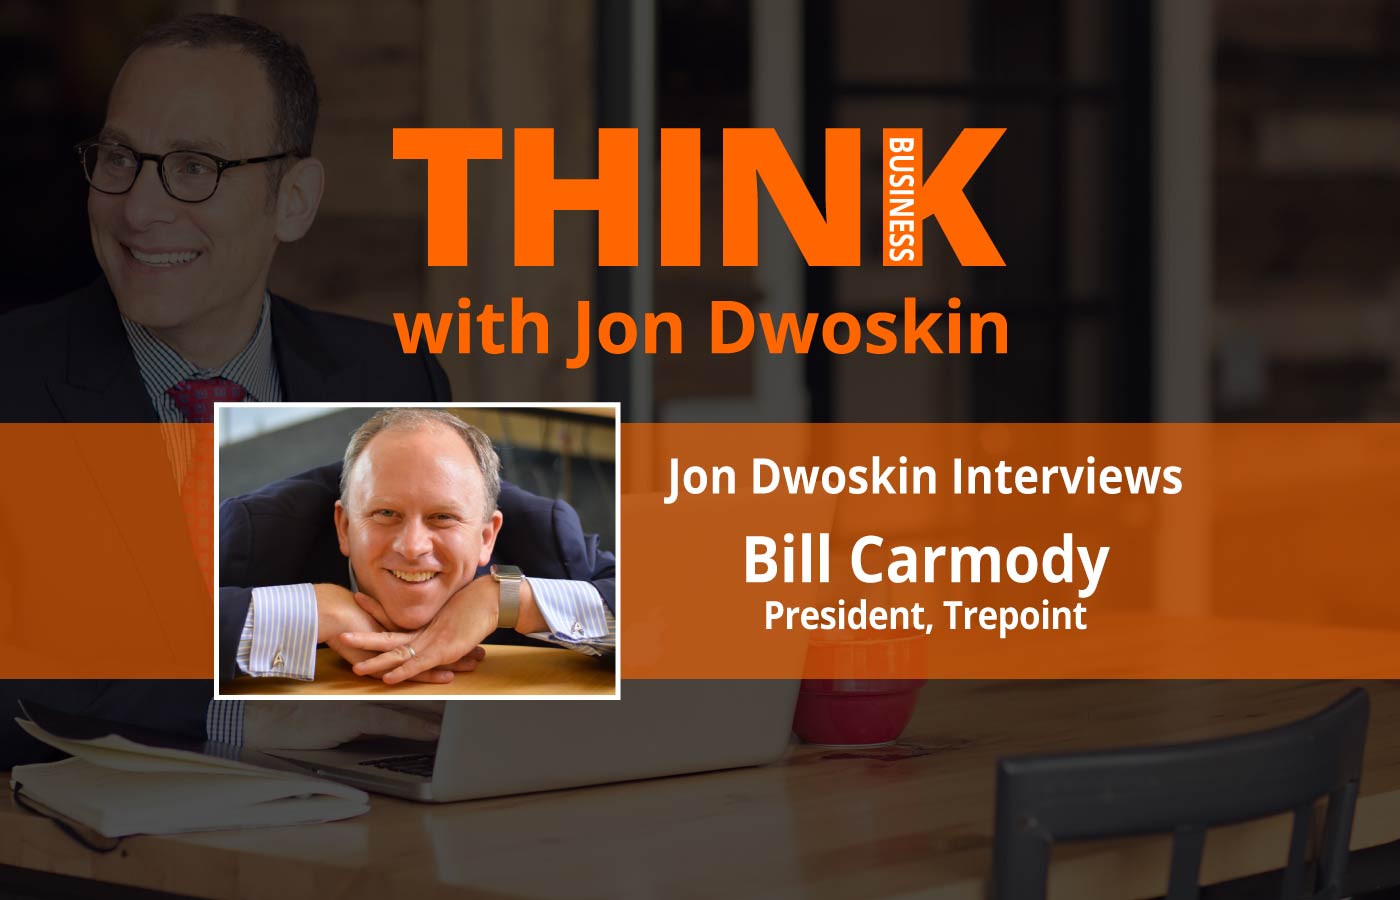 THINK Business: Jon Dwoskin Interviews Bill Carmody, President at Trepoint